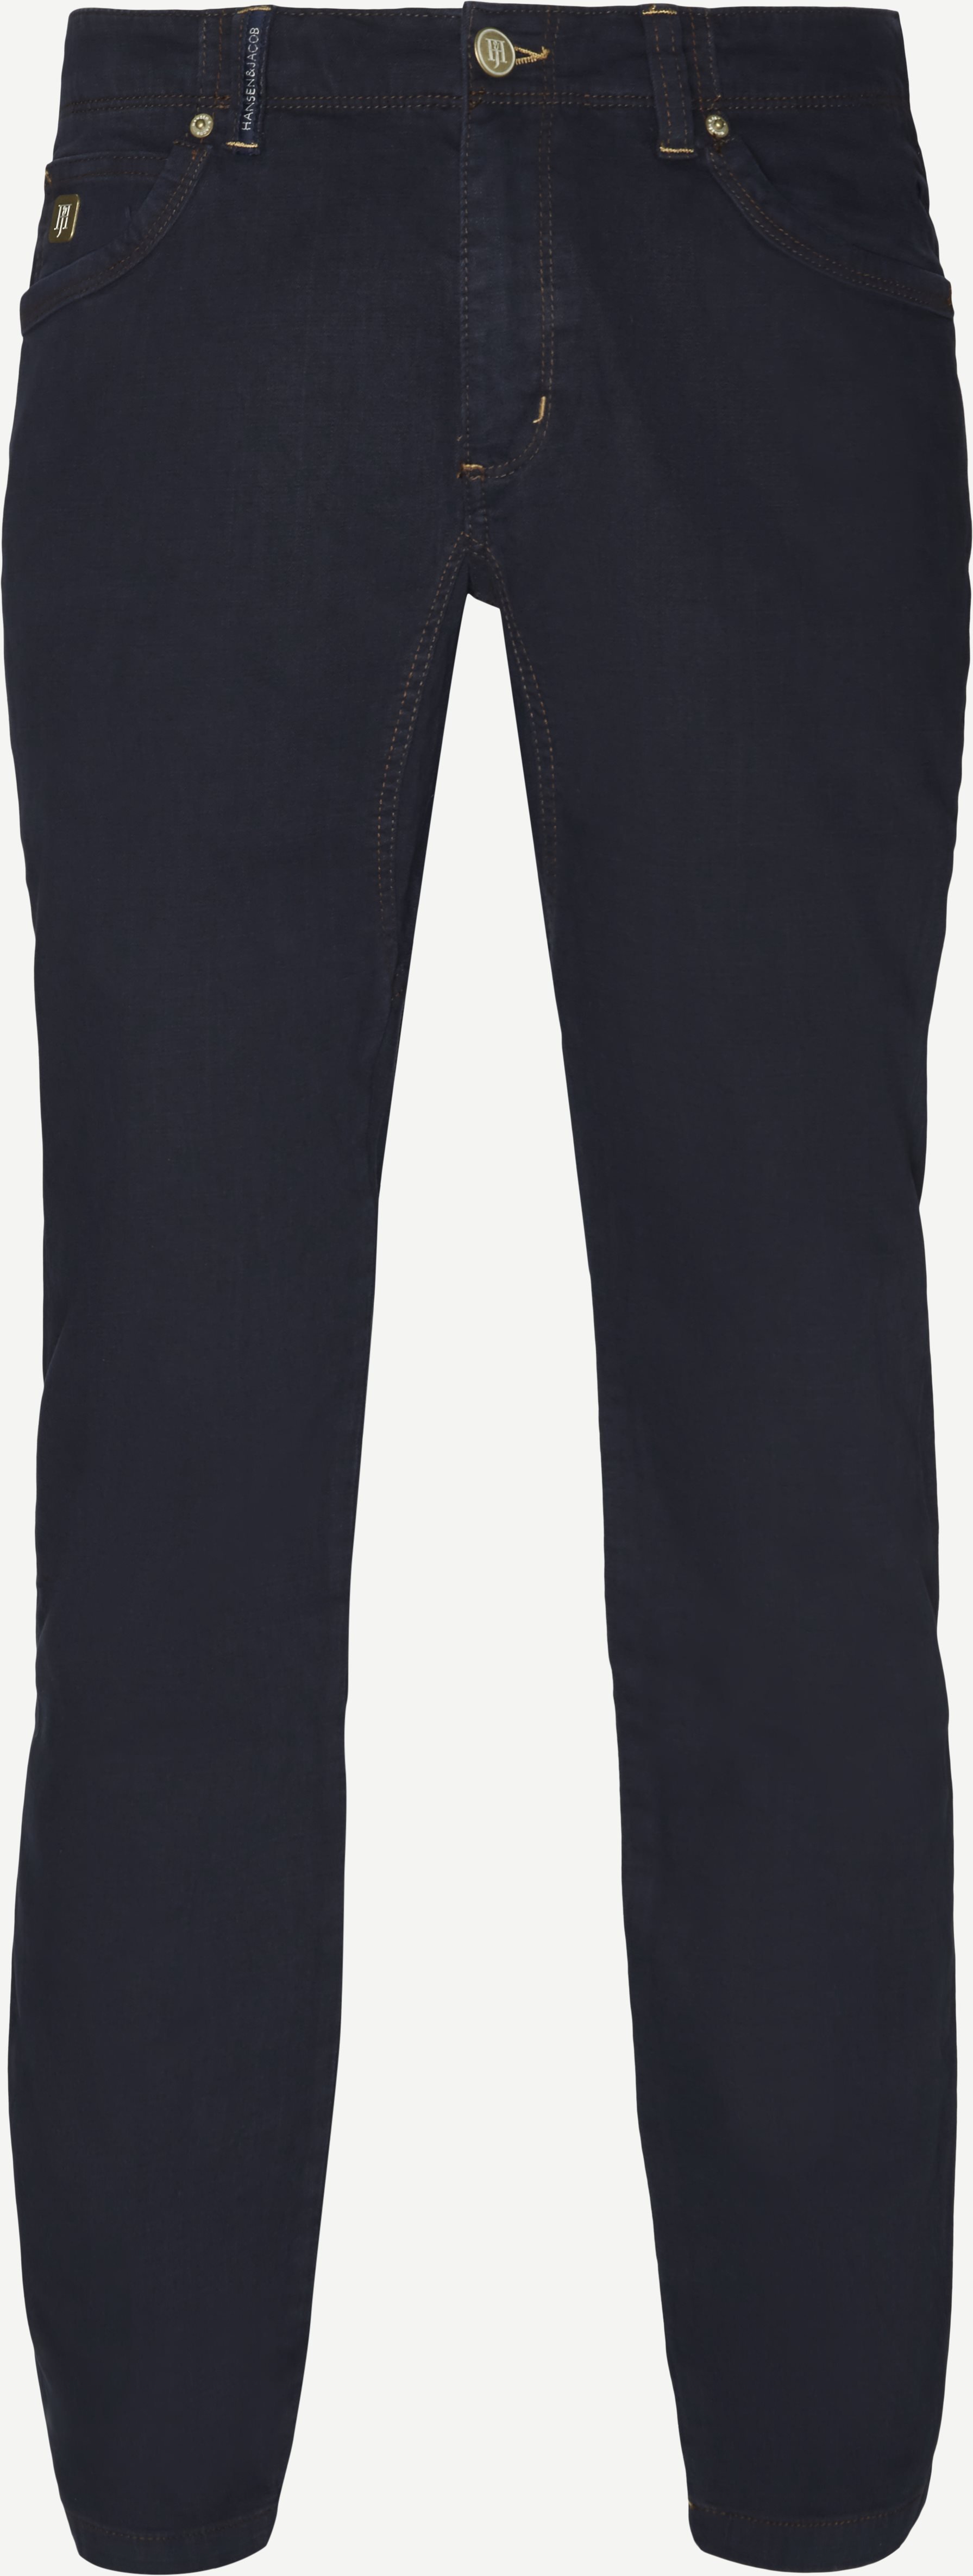 Cut'N Sew Jeans - Jeans - Modern fit - Blå